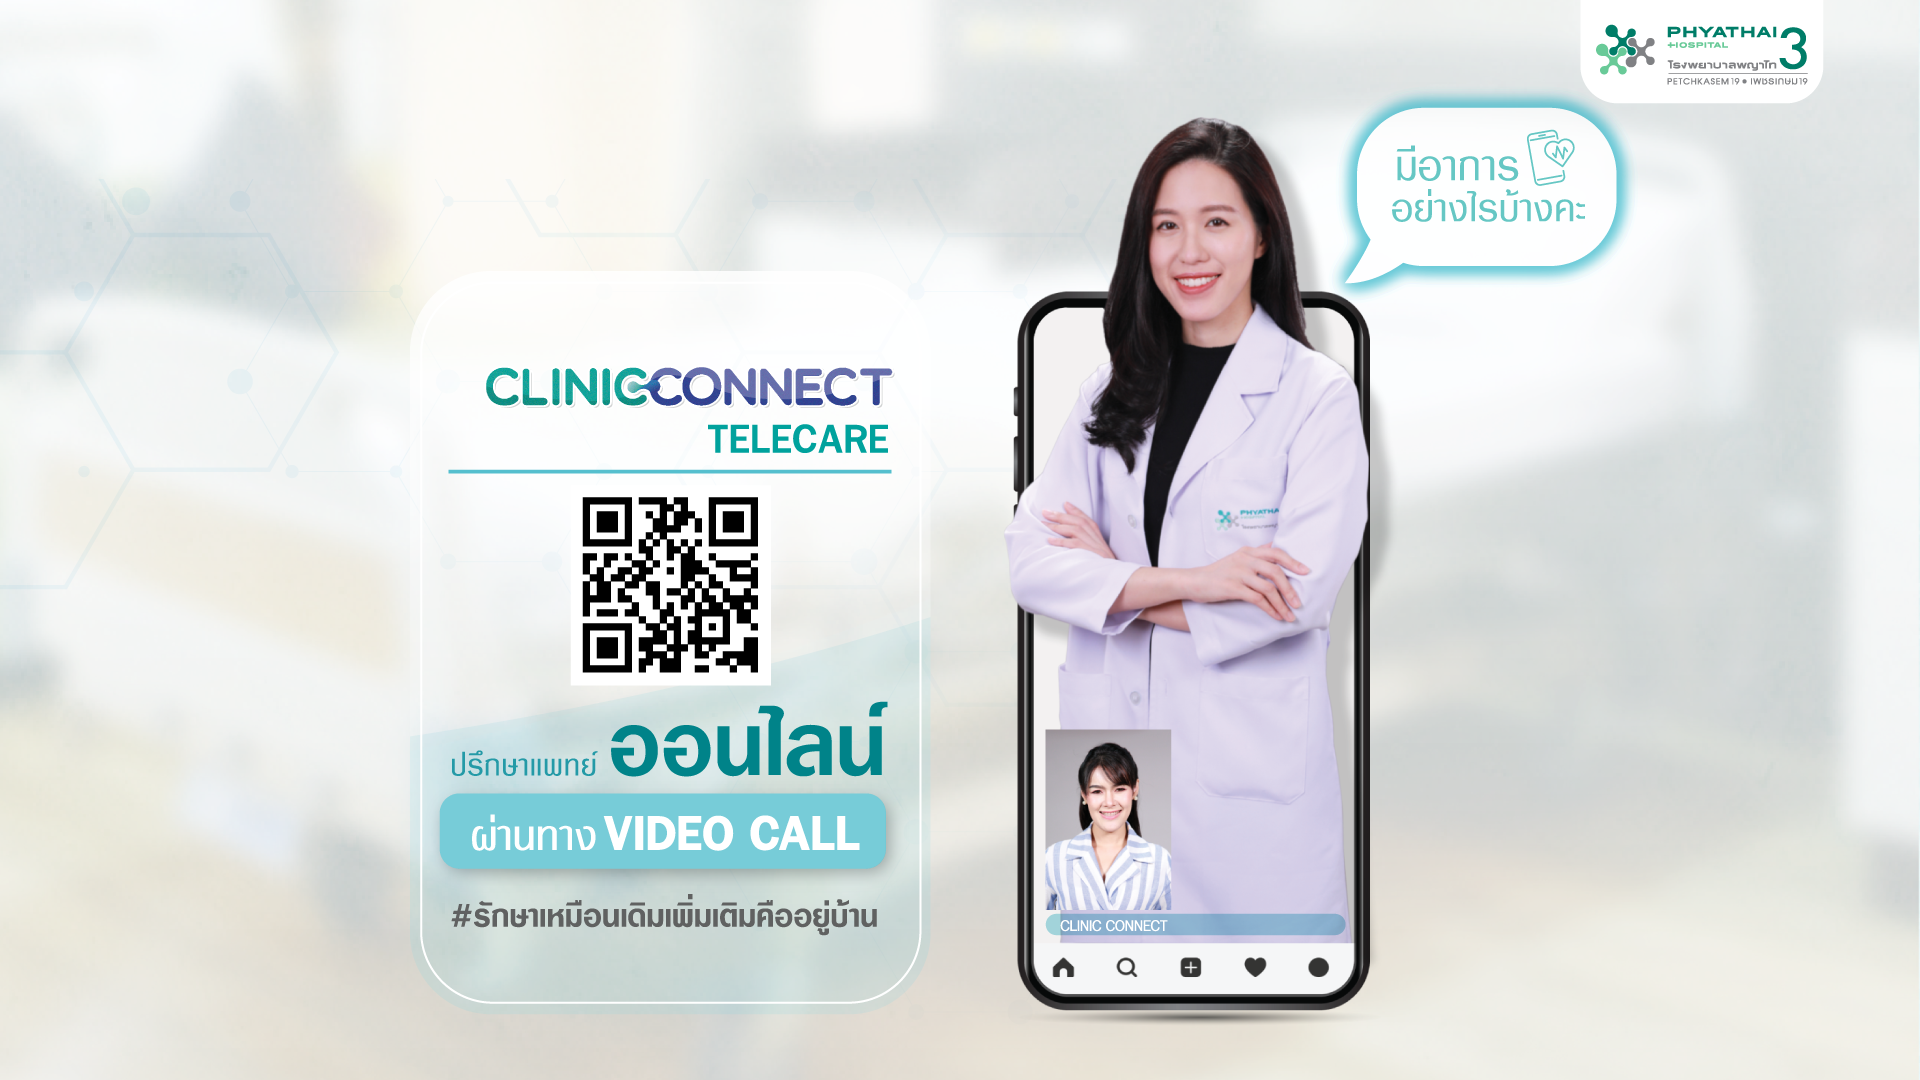 Phyathai 3 TELECARE บริการให้คำปรึกษาทางการแพทย์แบบ Real-Time Video Call ผ่านระบบ TELECARE